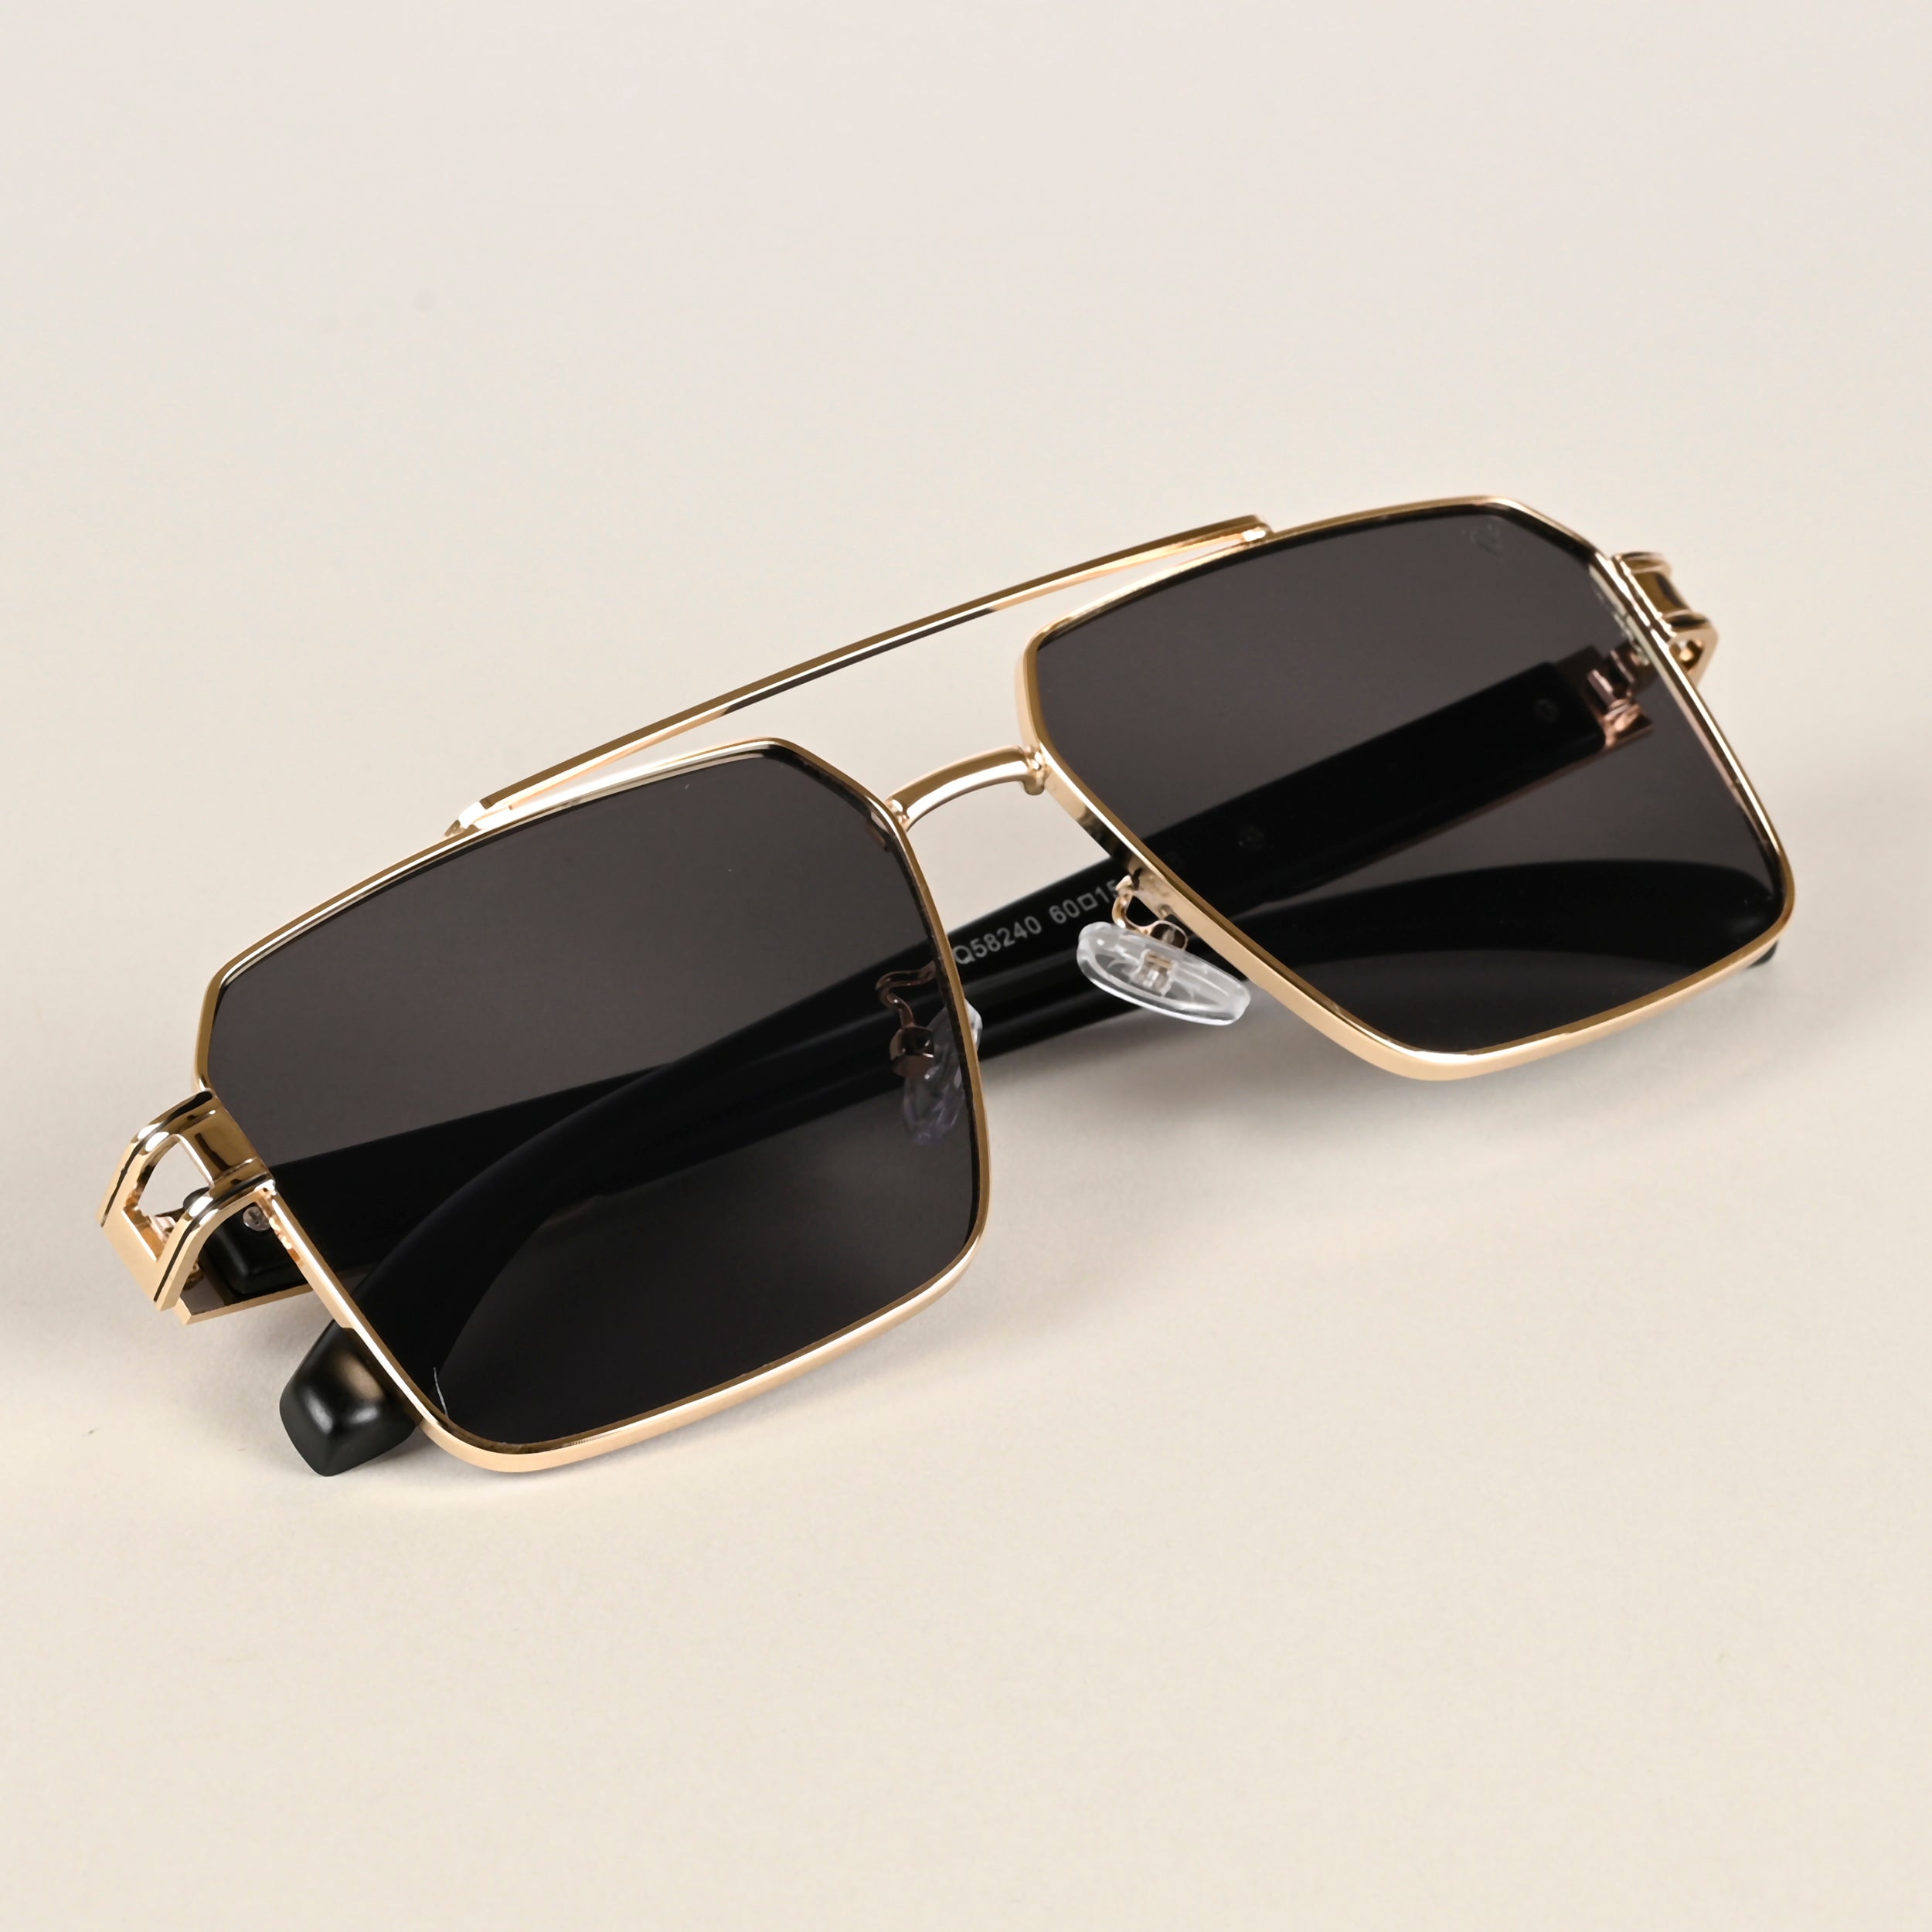 Voyage Black Wayfarer Sunglasses for Men & Women - MG4209